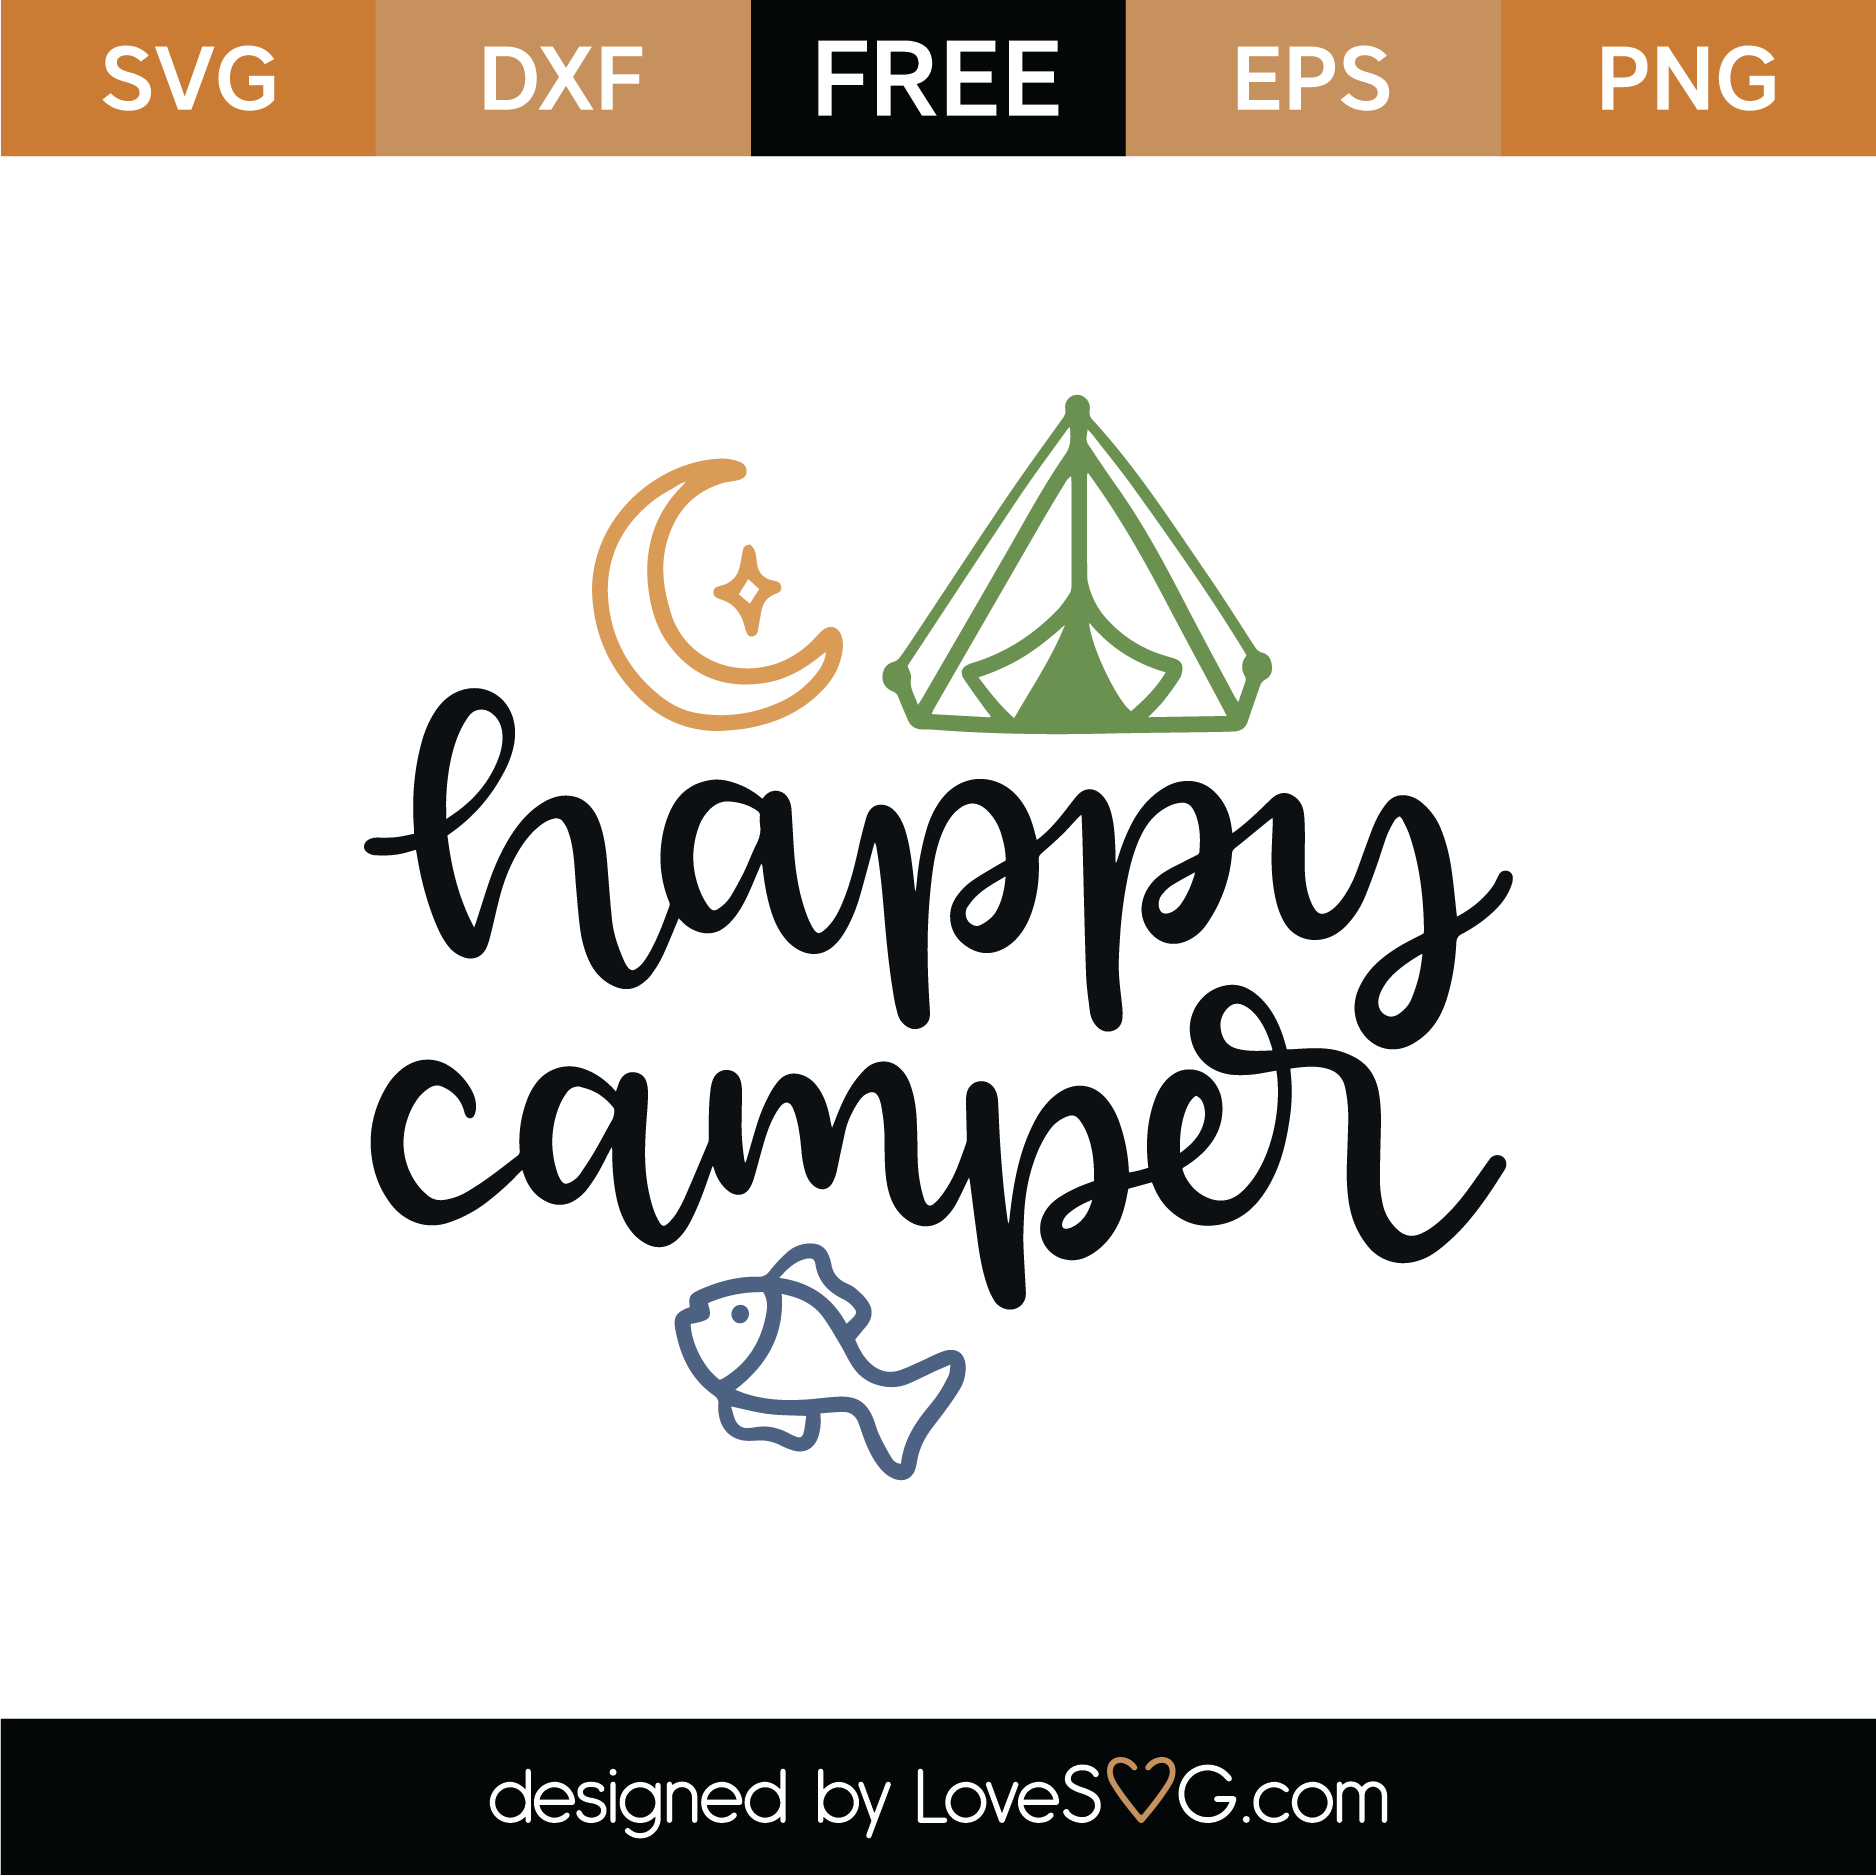 Download Free Happy Camper SVG Cut File | Lovesvg.com